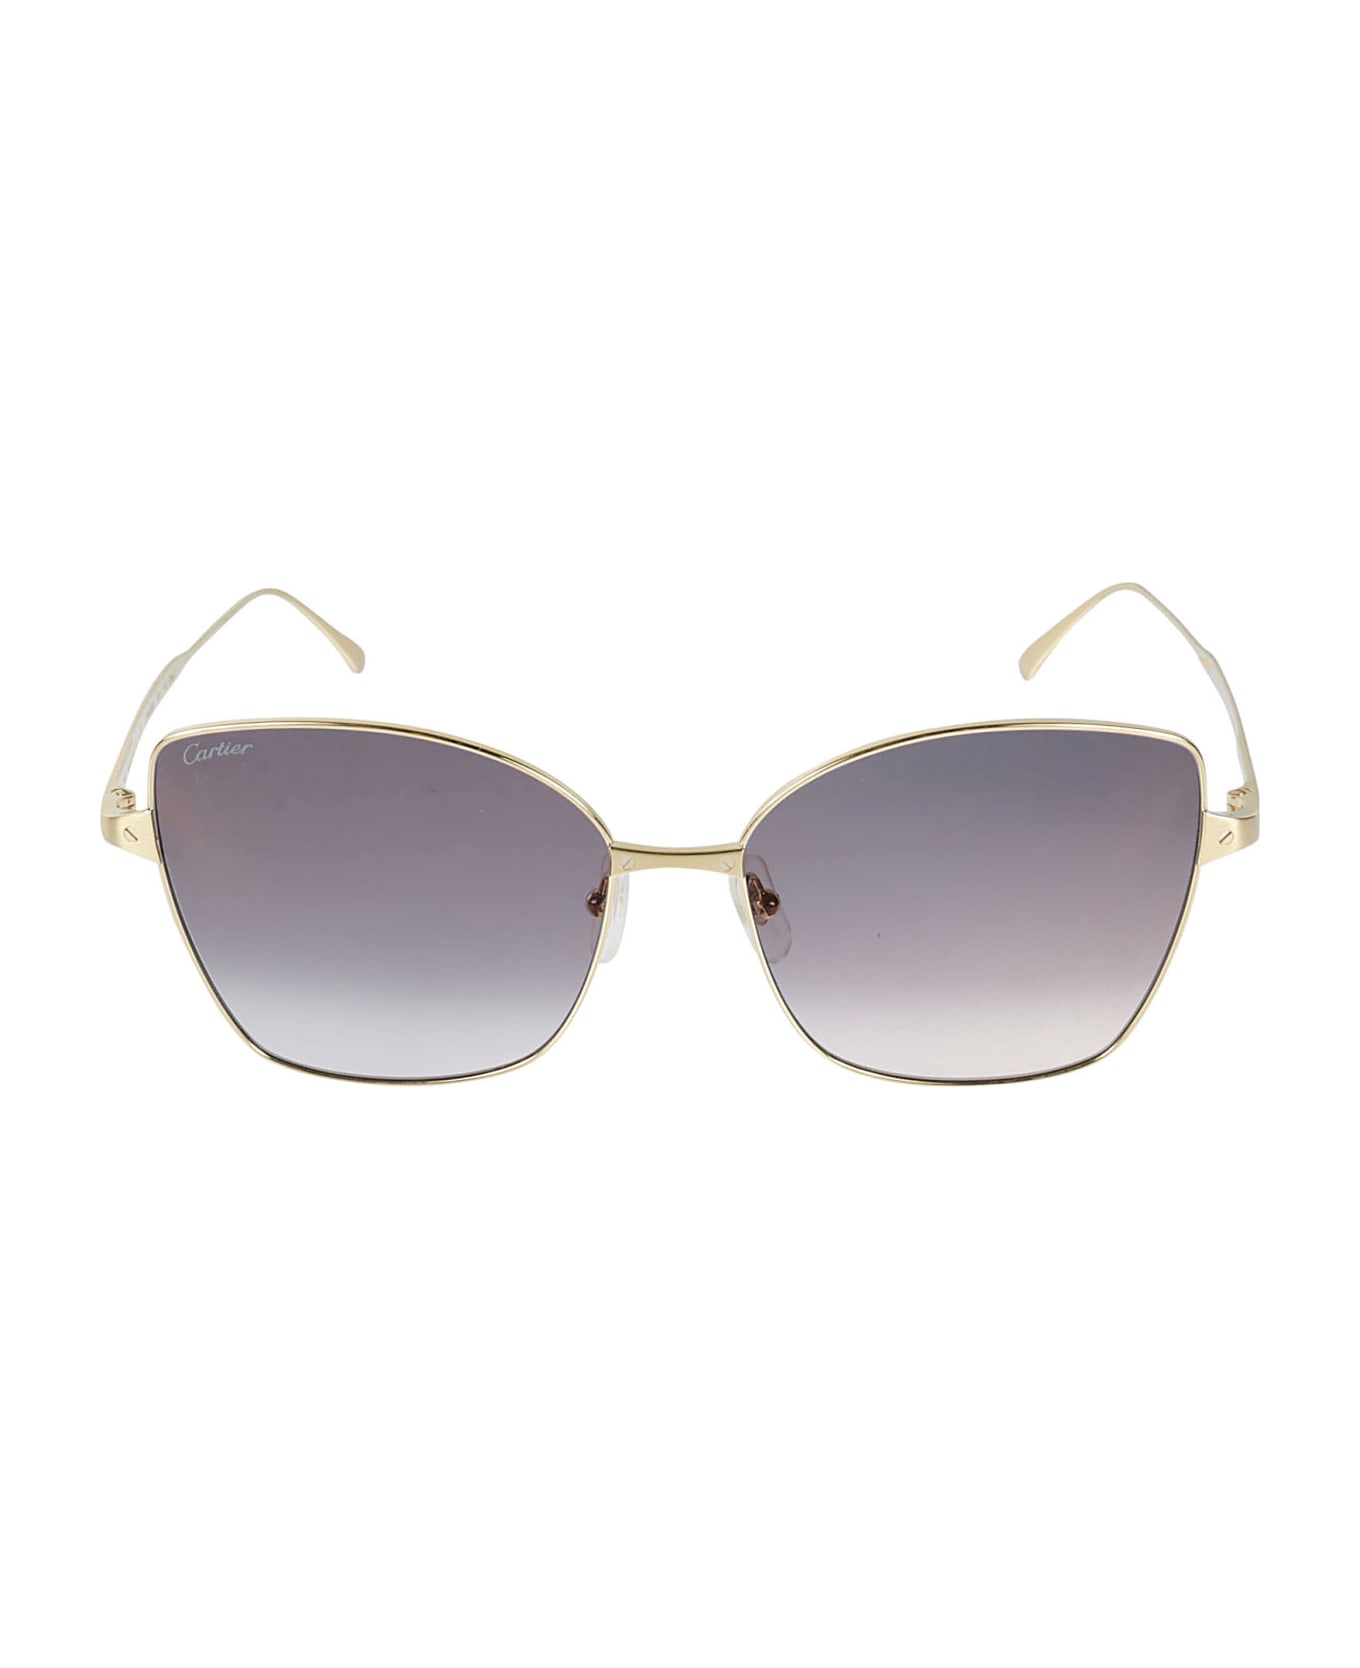 Cartier Eyewear Cat Eye Square Sunglasses - Gold/Grey サングラス